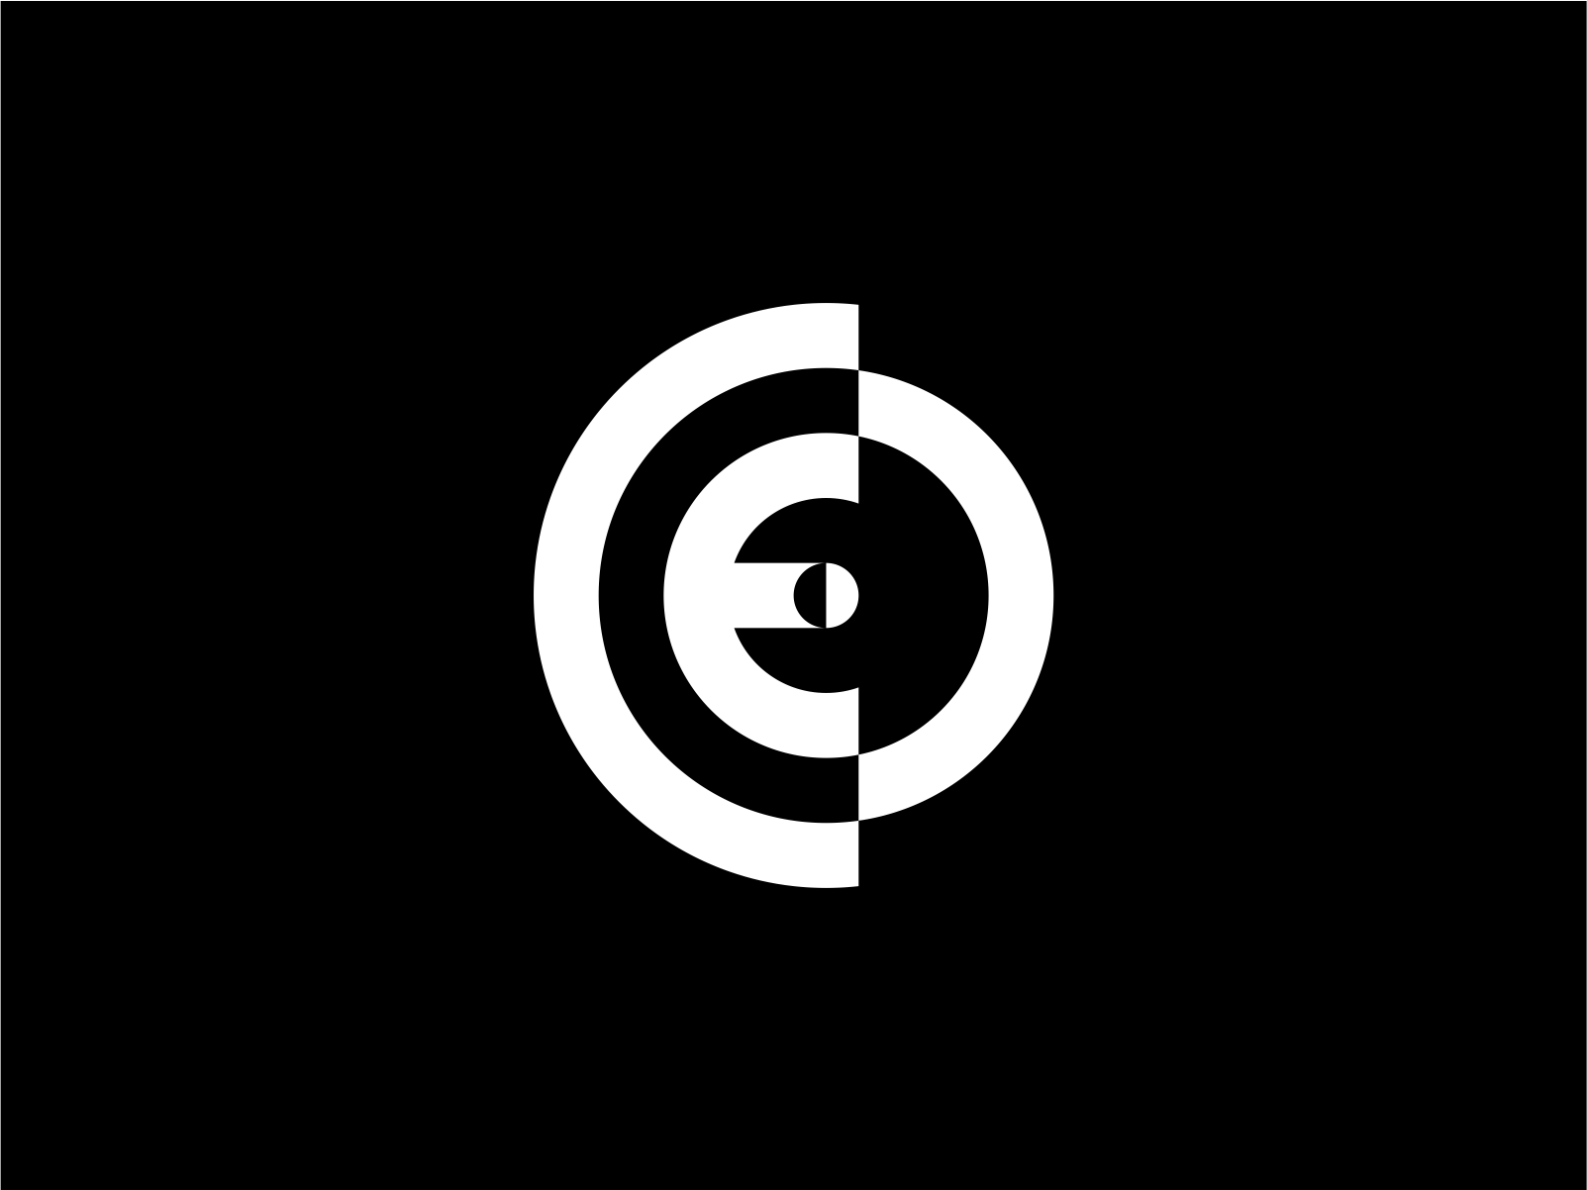 eC Logo Design by ssdesign2020 on Dribbble